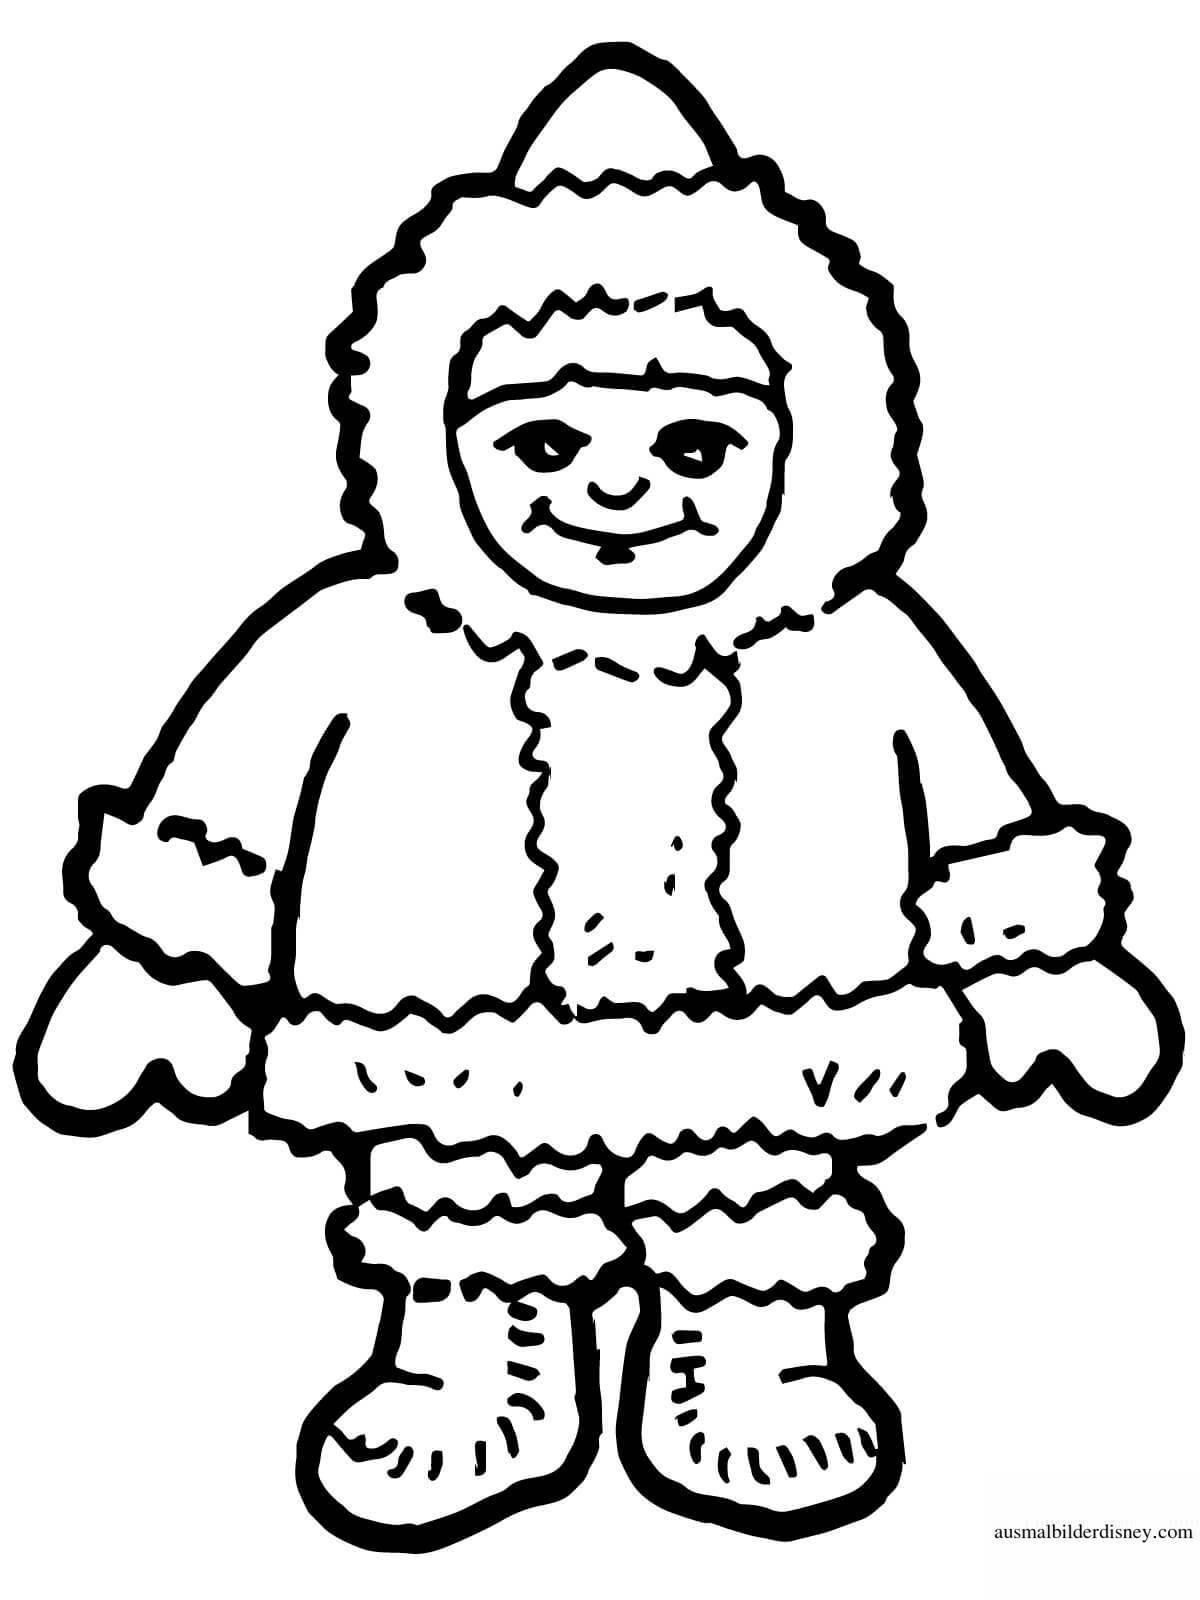 Adorable Eskimo coloring book for kids